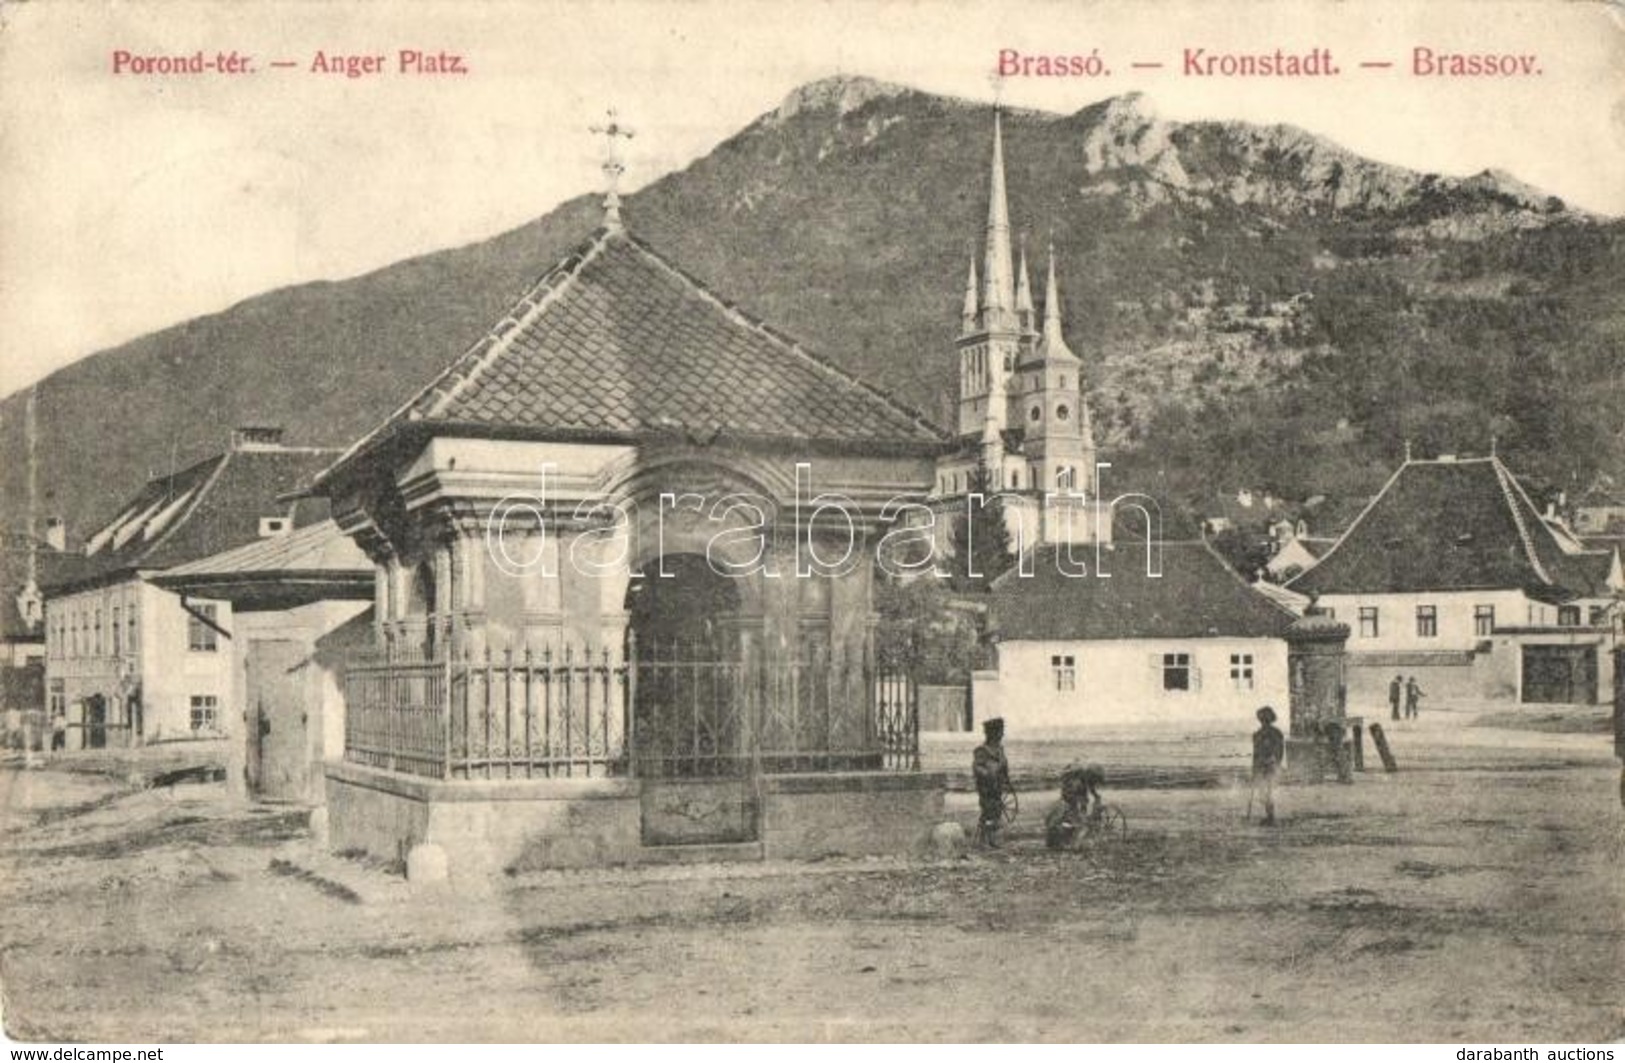 T2 1912 Brassó, Kronstadt, Brasov; Porond Tér, Kápolna / Anger Platz / Square, Chapel - Ohne Zuordnung